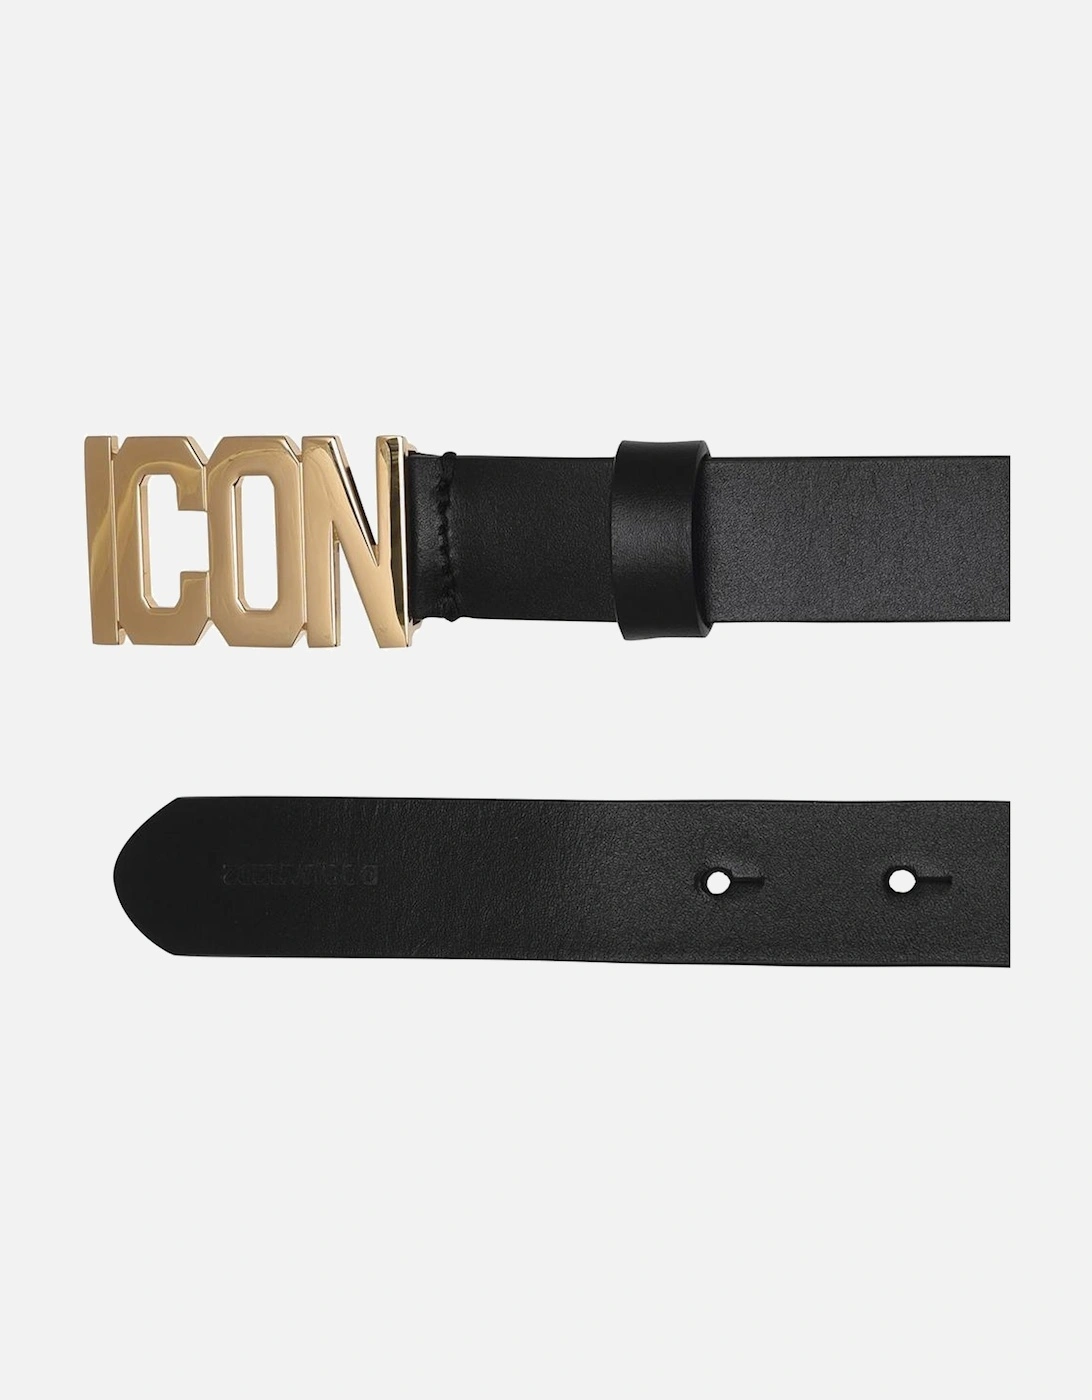 Men's Gold ICON Belt Black